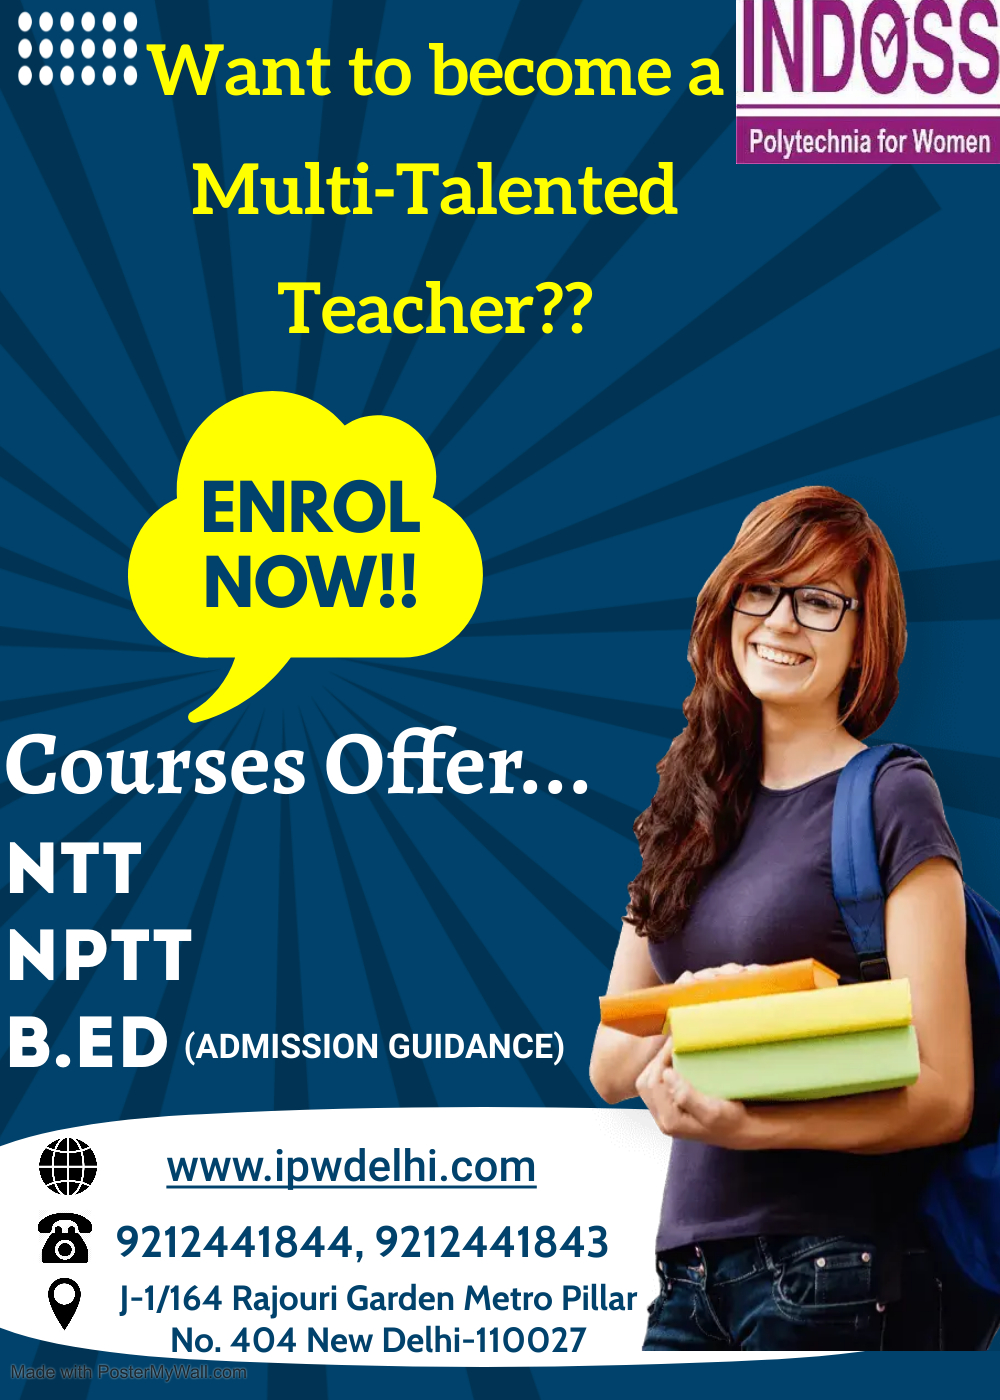 Nursery Primary Teacher Training Courses in DelhiEducation and LearningProfessional CoursesWest DelhiRajouri Garden